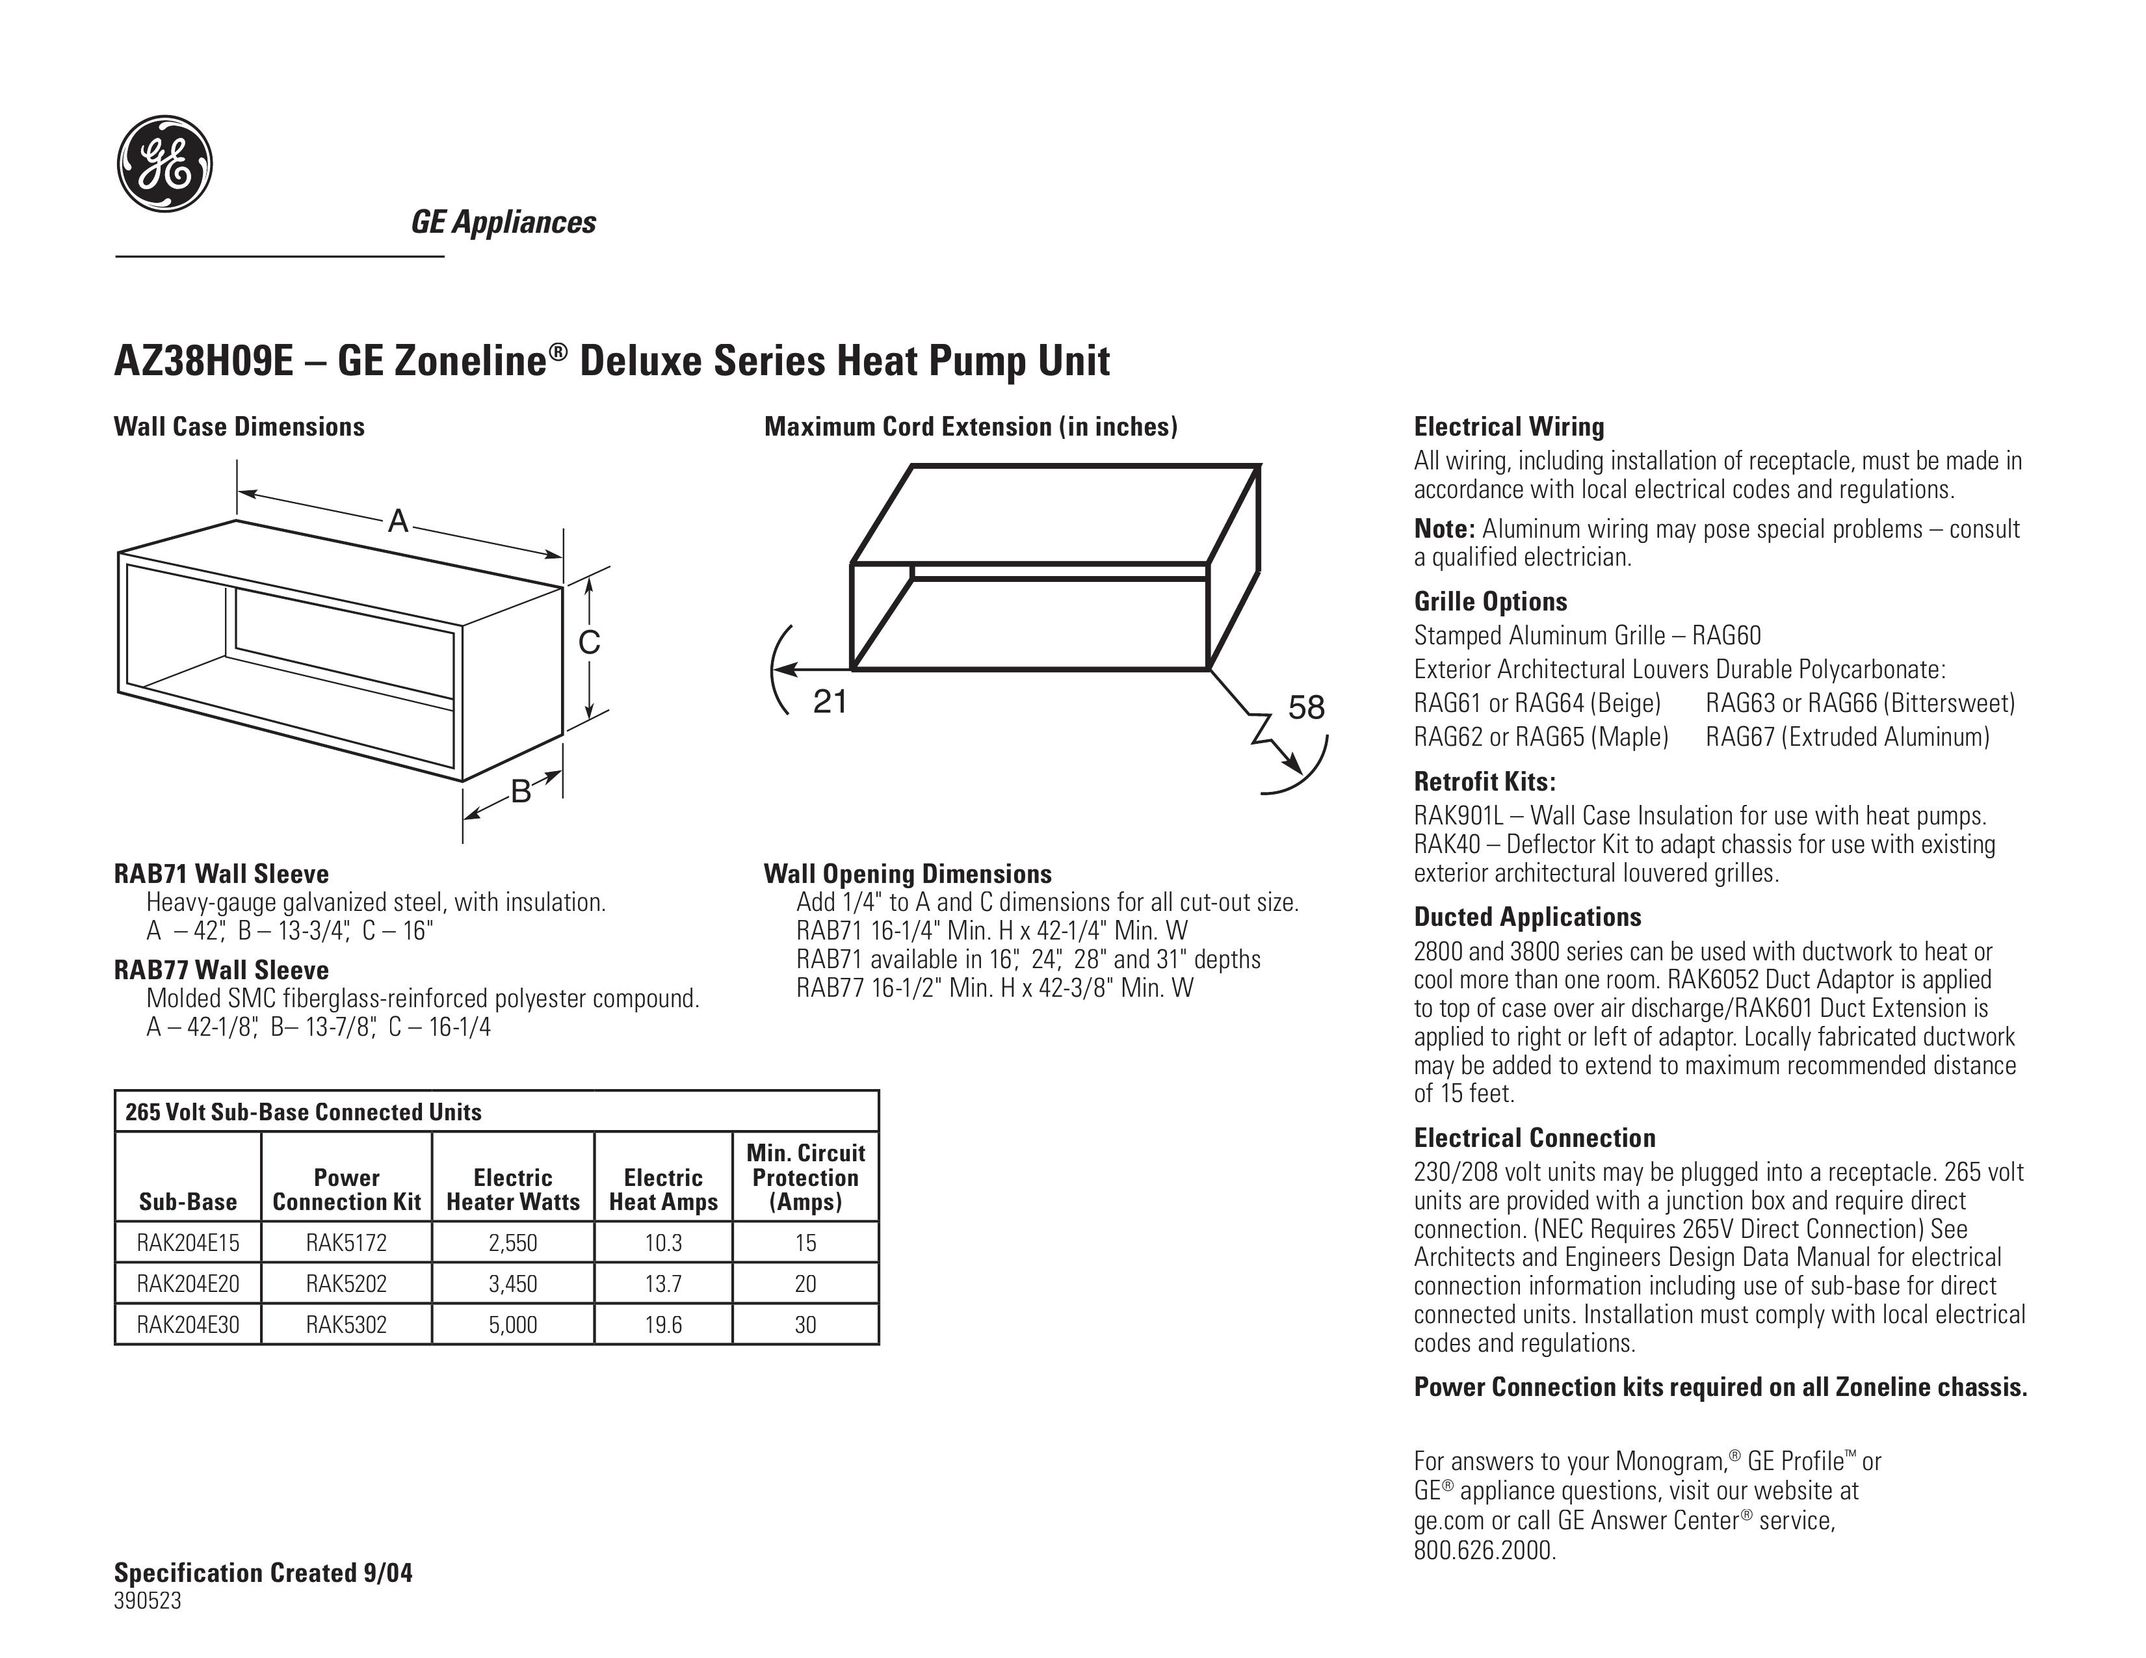 GE AZ38H09EAC Heat Pump User Manual